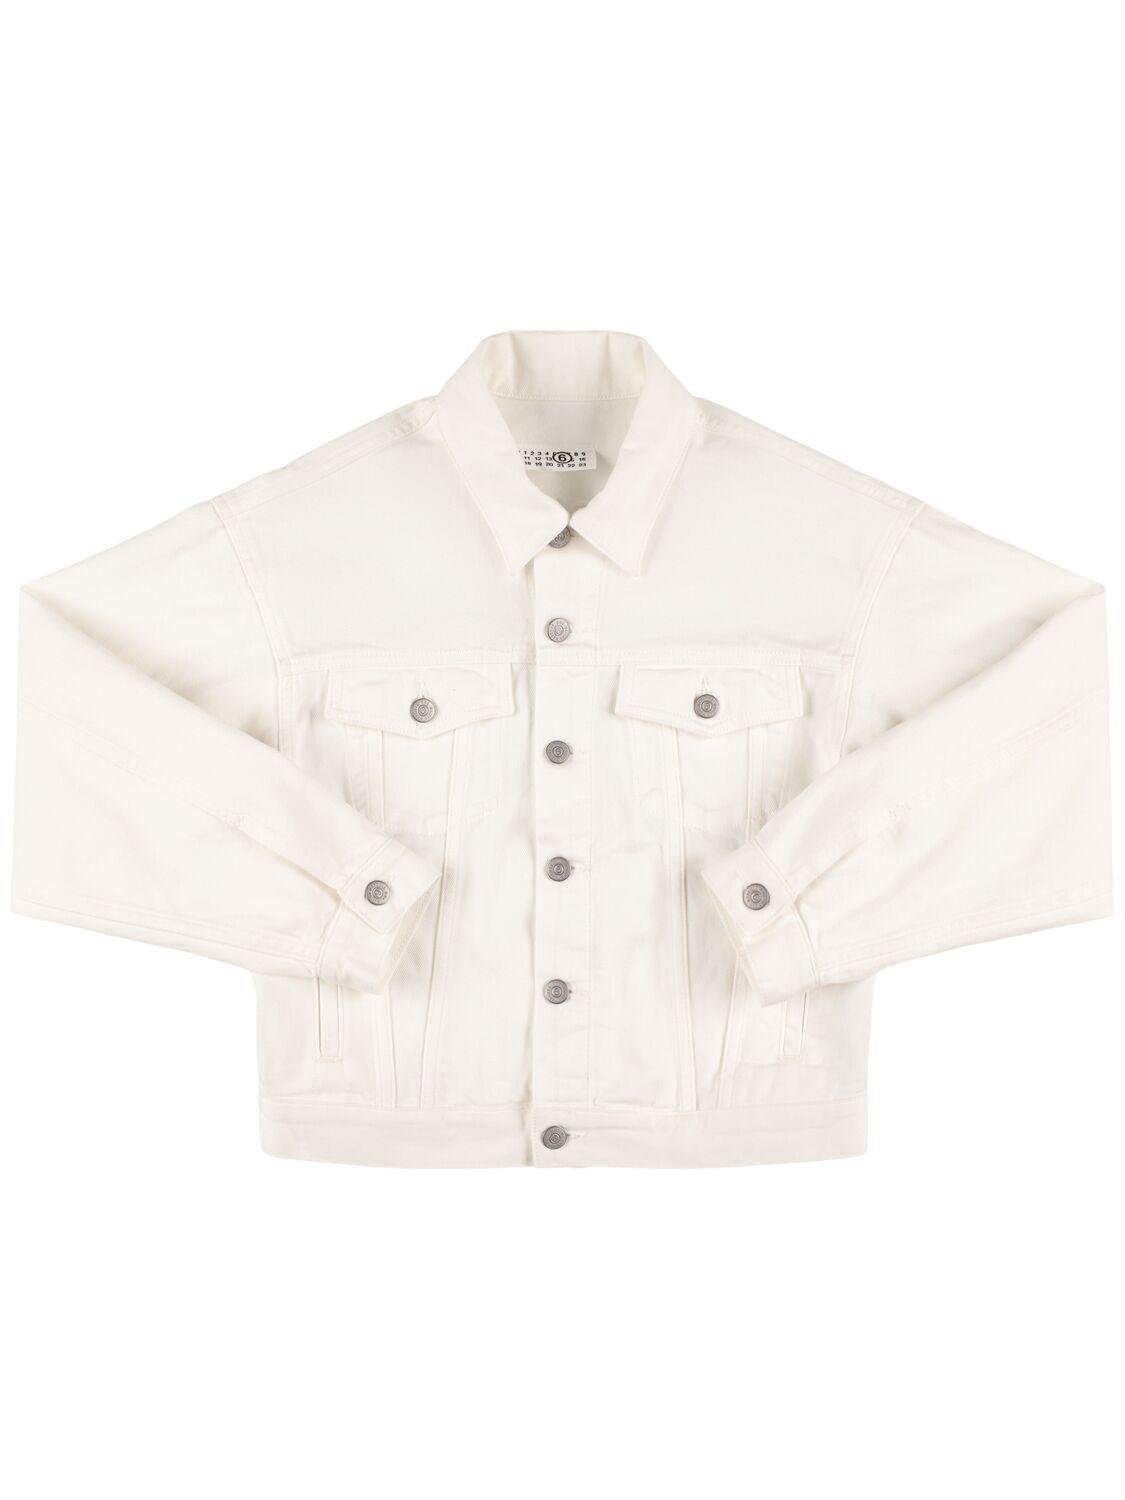 Cotton Denim Jacket by MM6 MAISON MARGIELA